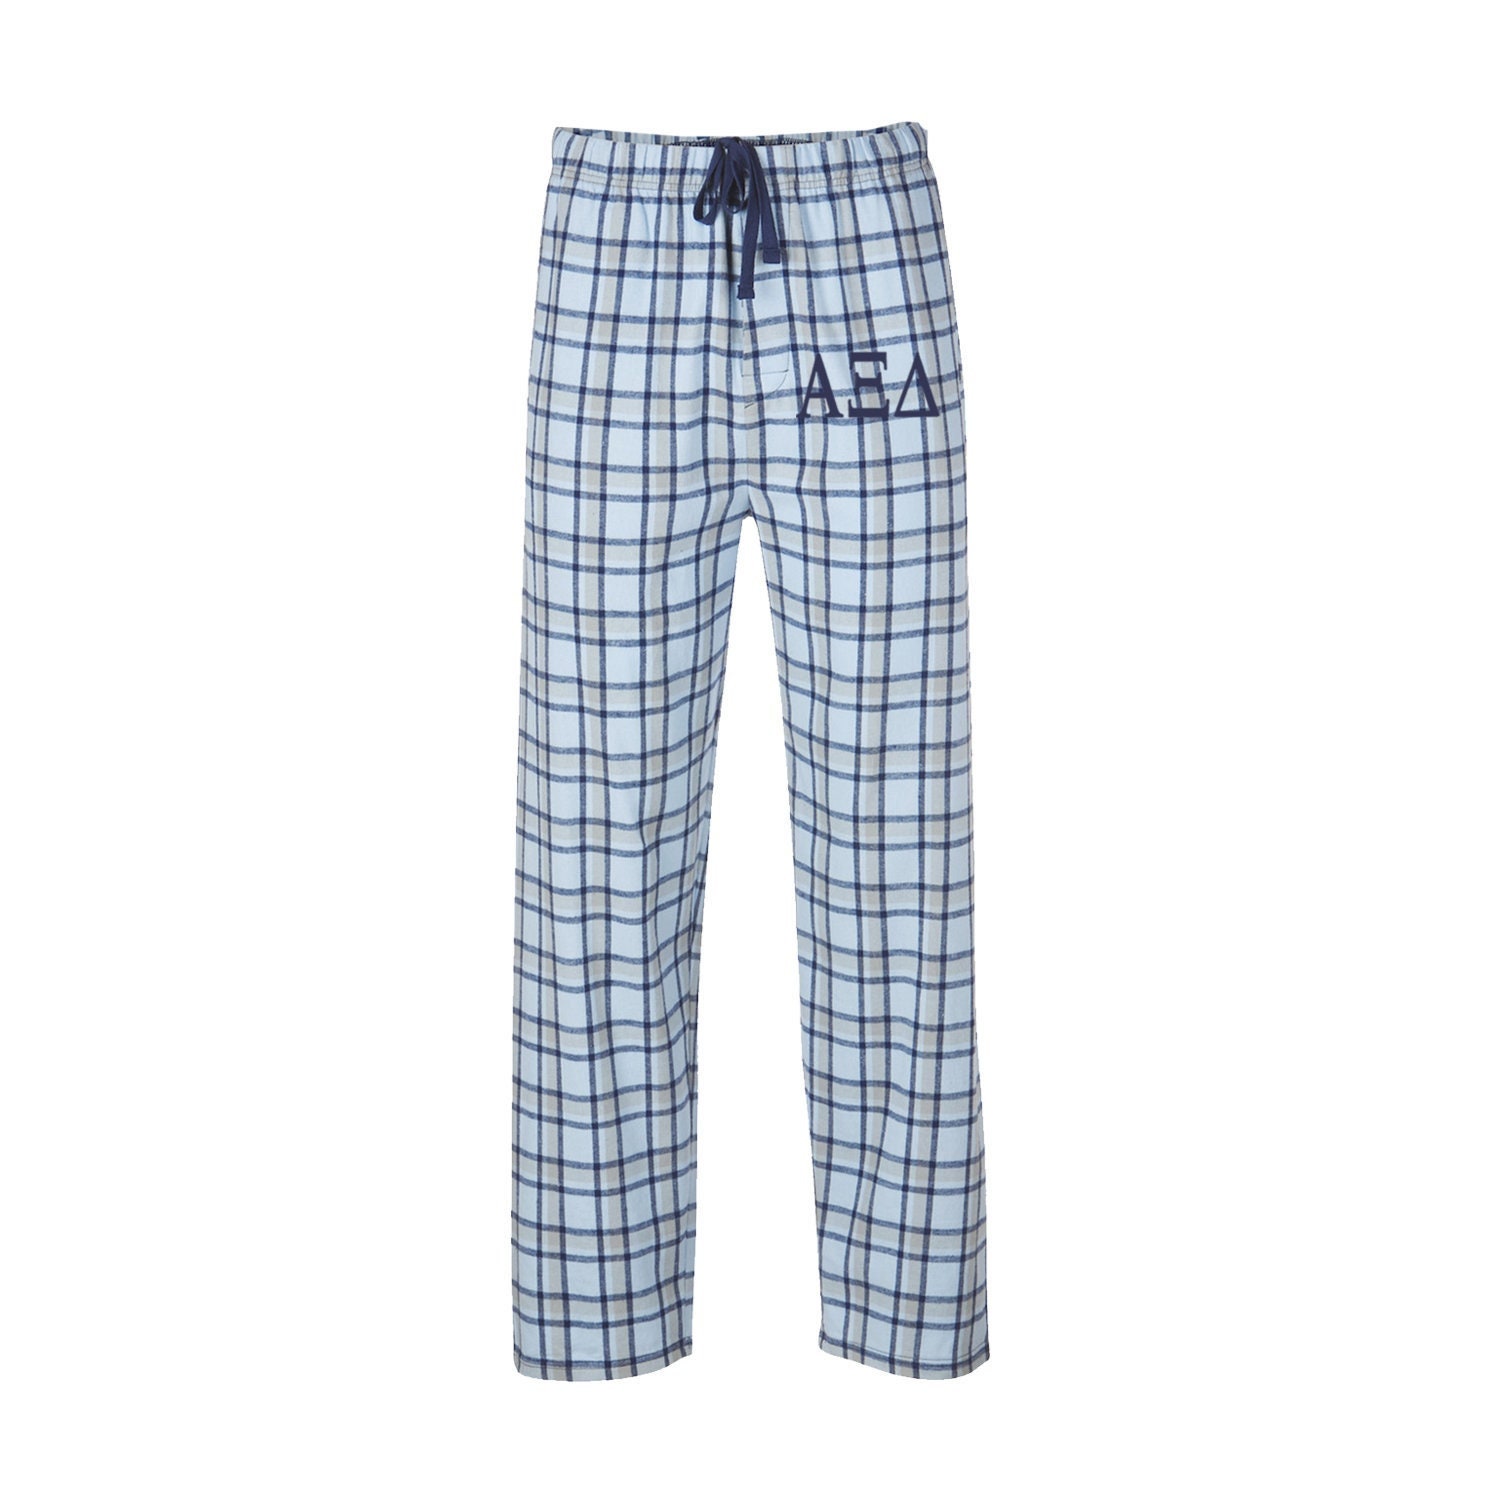 Alpha Xi Delta, Flannel Pants, Loungewear, Comfy Pj Pants AXD Sleepwear  Pajama Bottoms Merchandise Swag Spirit Wear Rush Bid Day Pledge Gift 